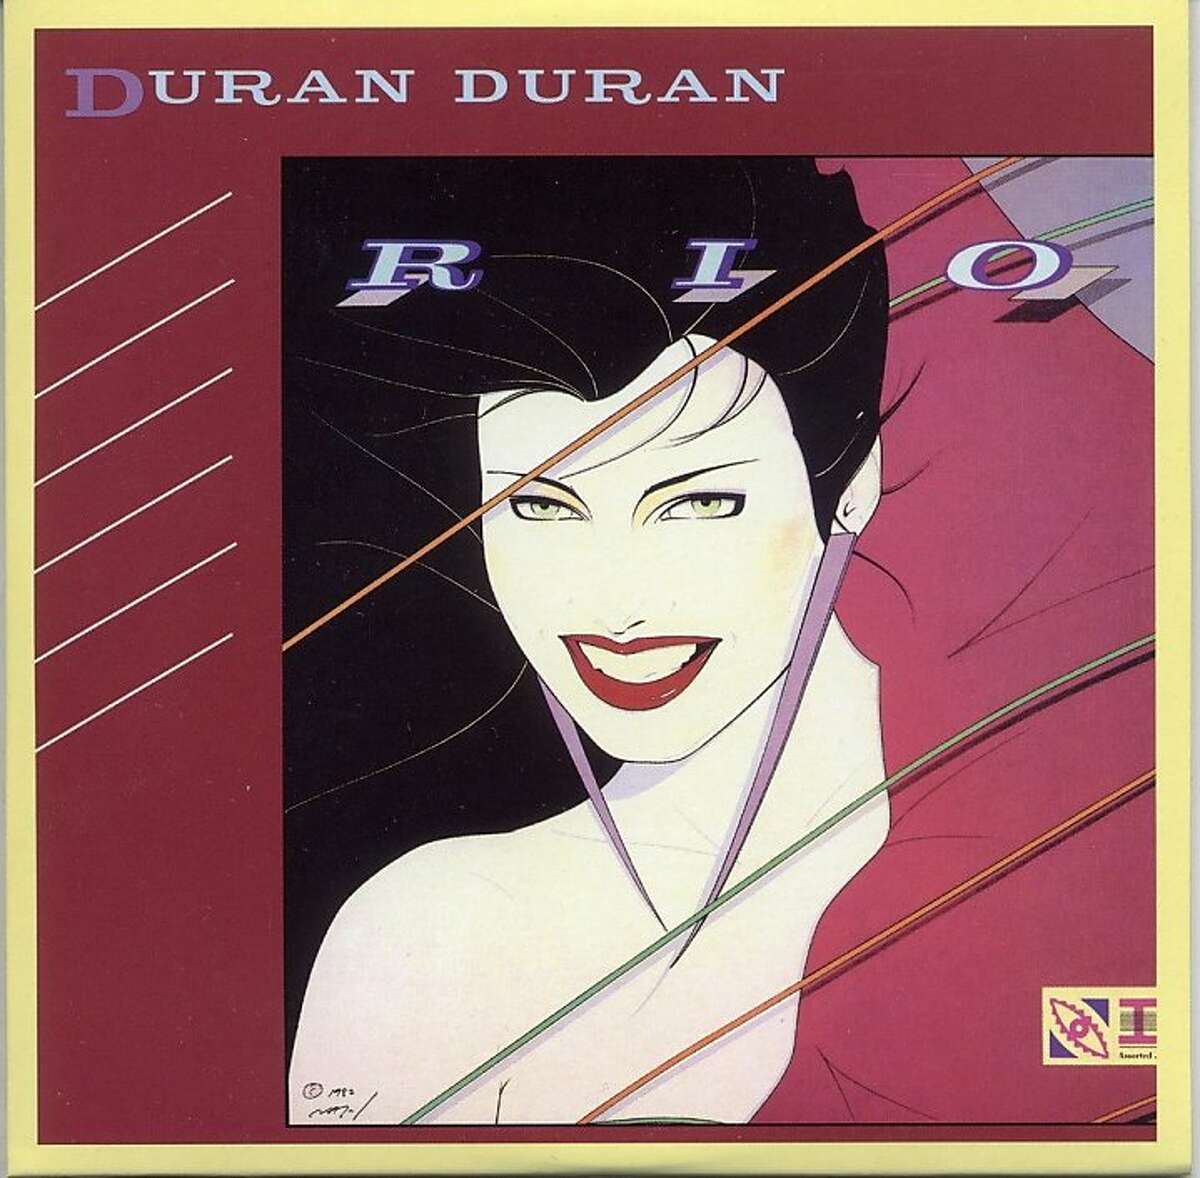 Duran Duran's "Rio" album cover, 1982, by Patrick Nagel.